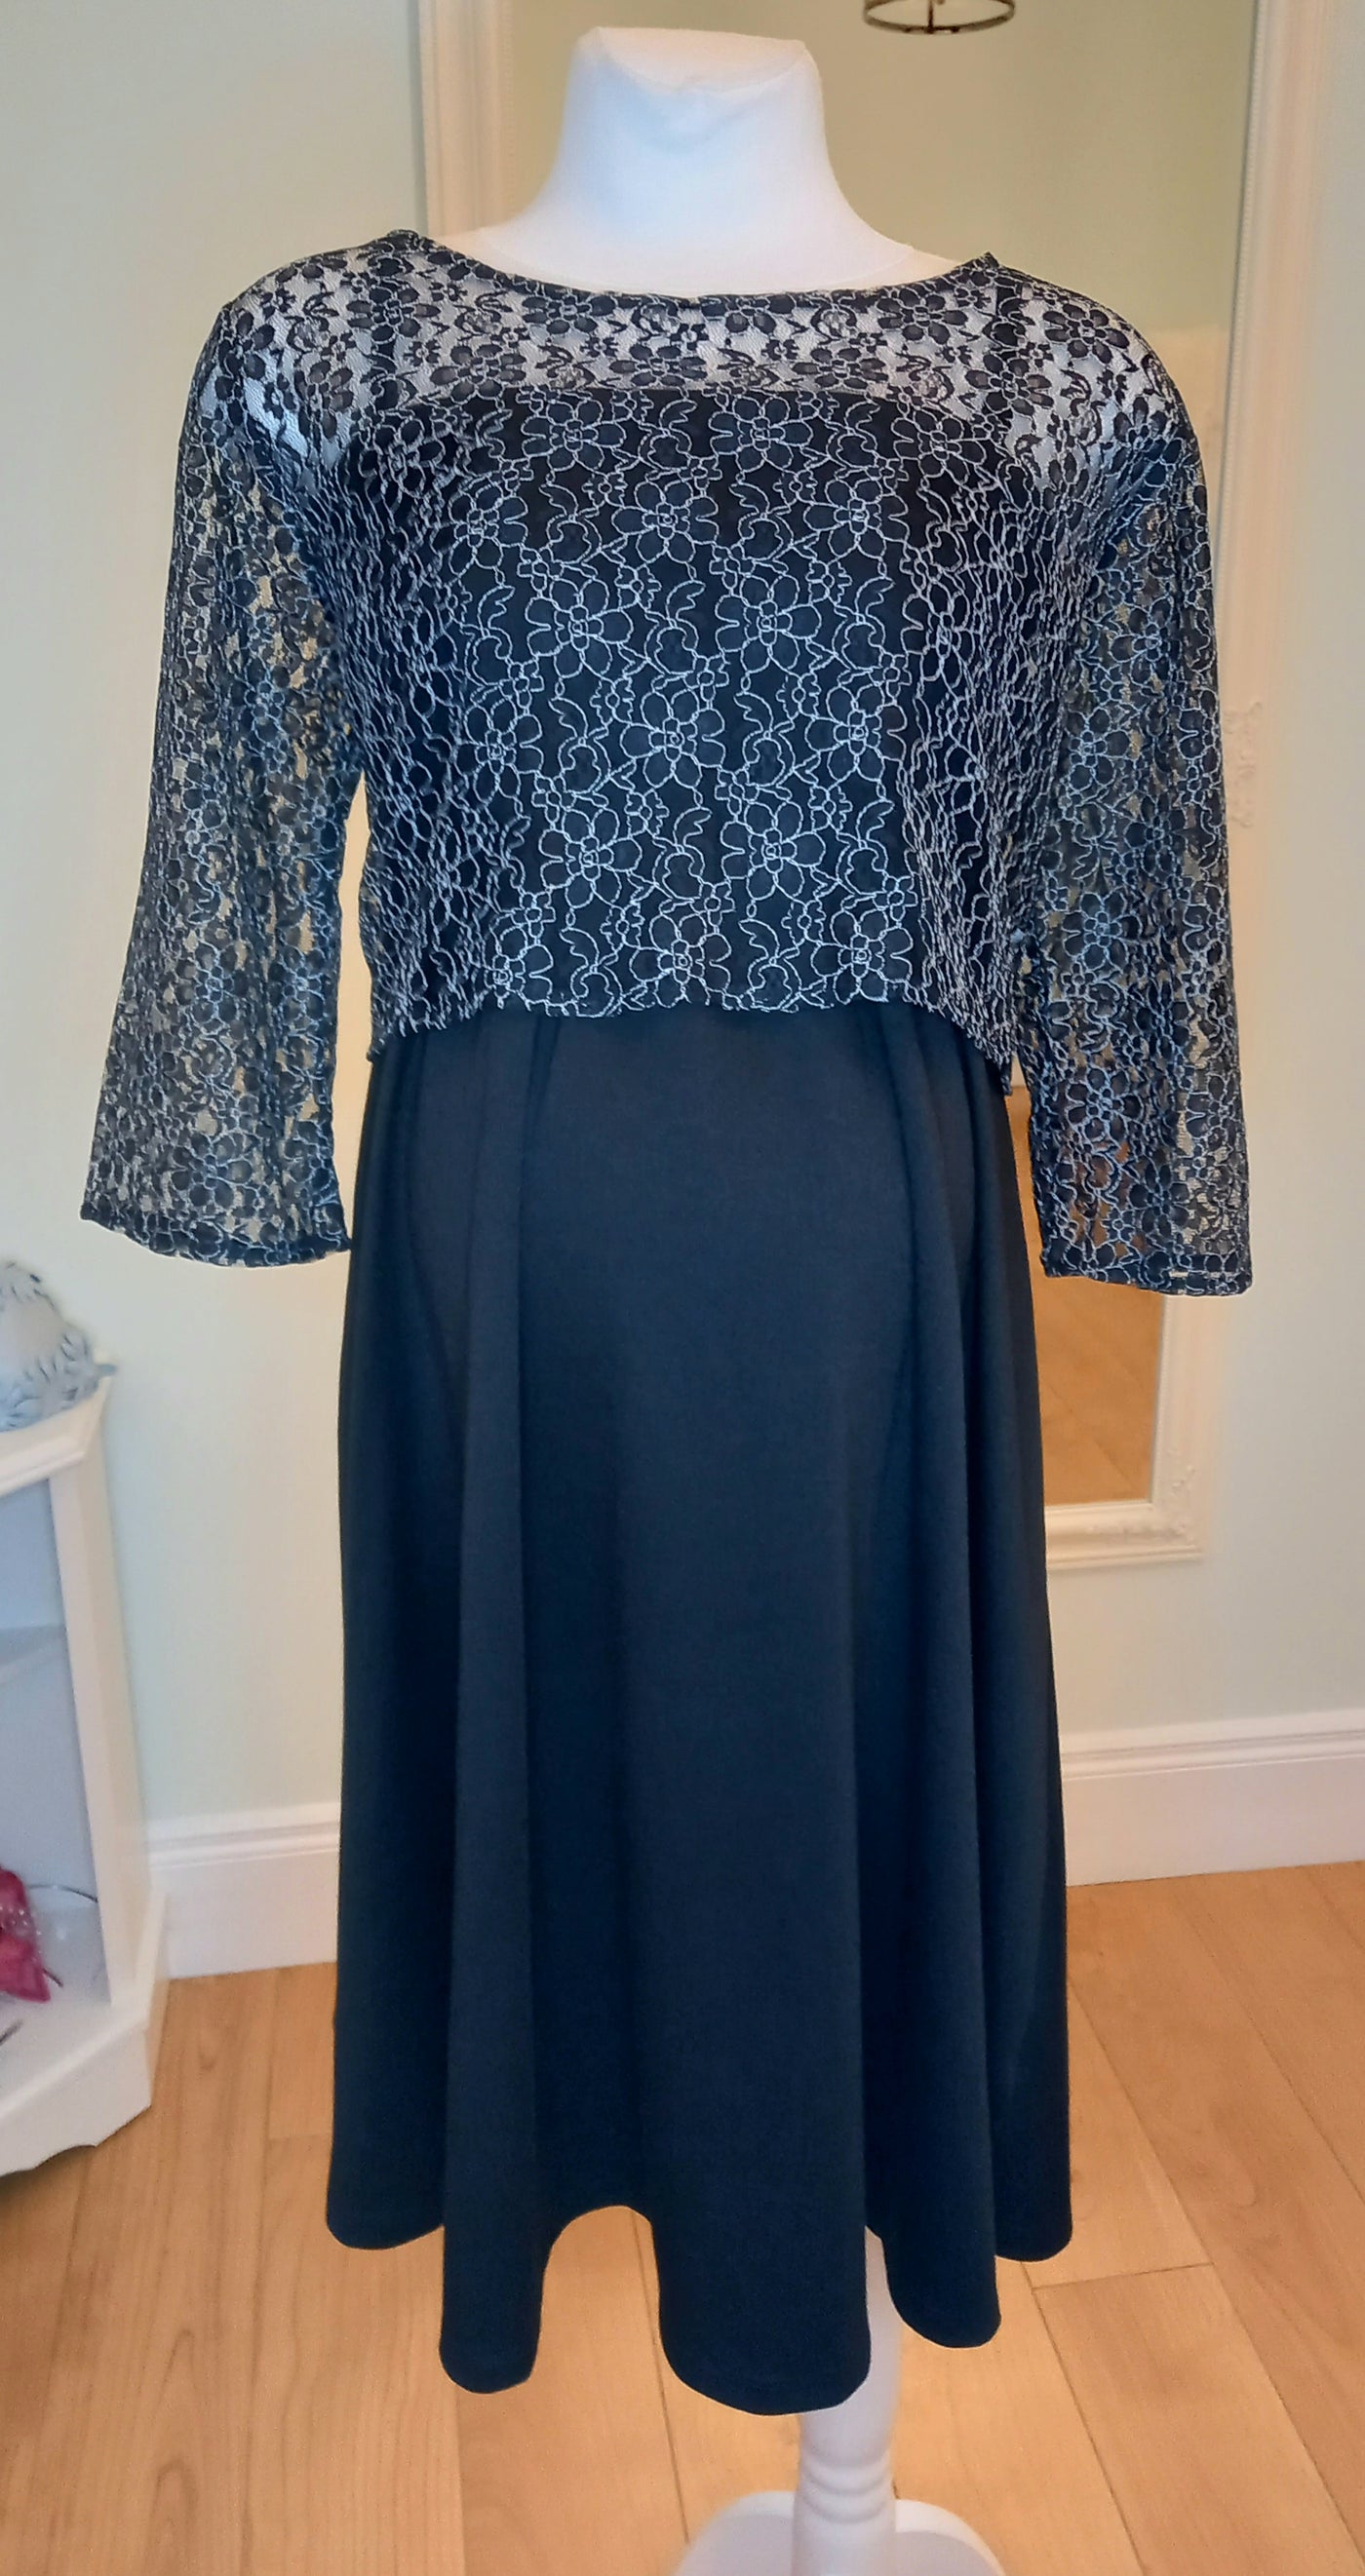 Tiffany Rose Black Molly Nursing Dress (BNWT) - Size 5 (UK 16/18)